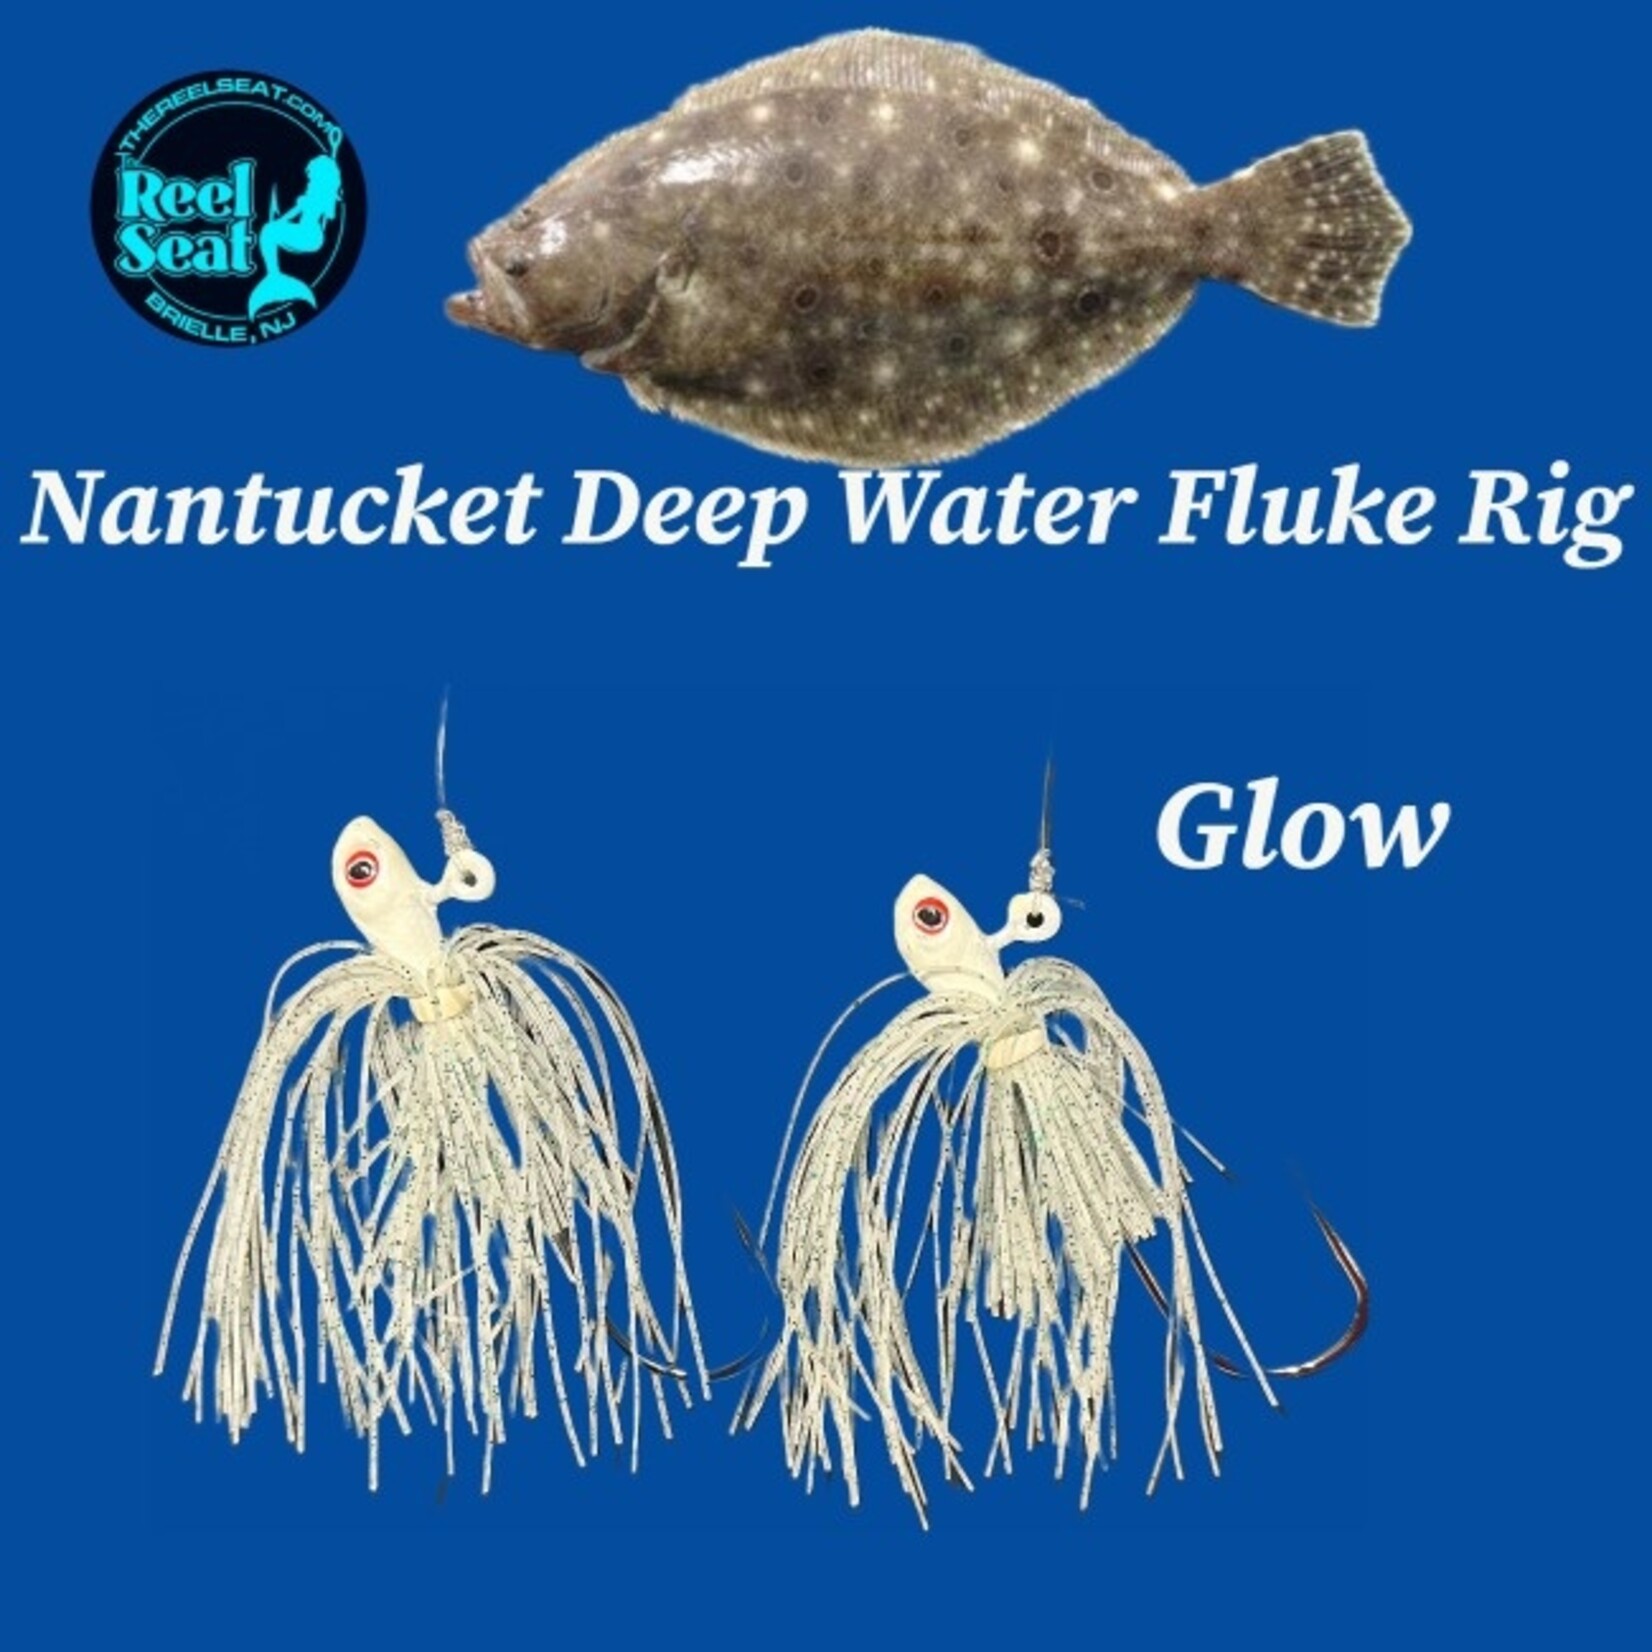 The Reel Seat RS Nantucket Deep Water Fluke Rig Glow